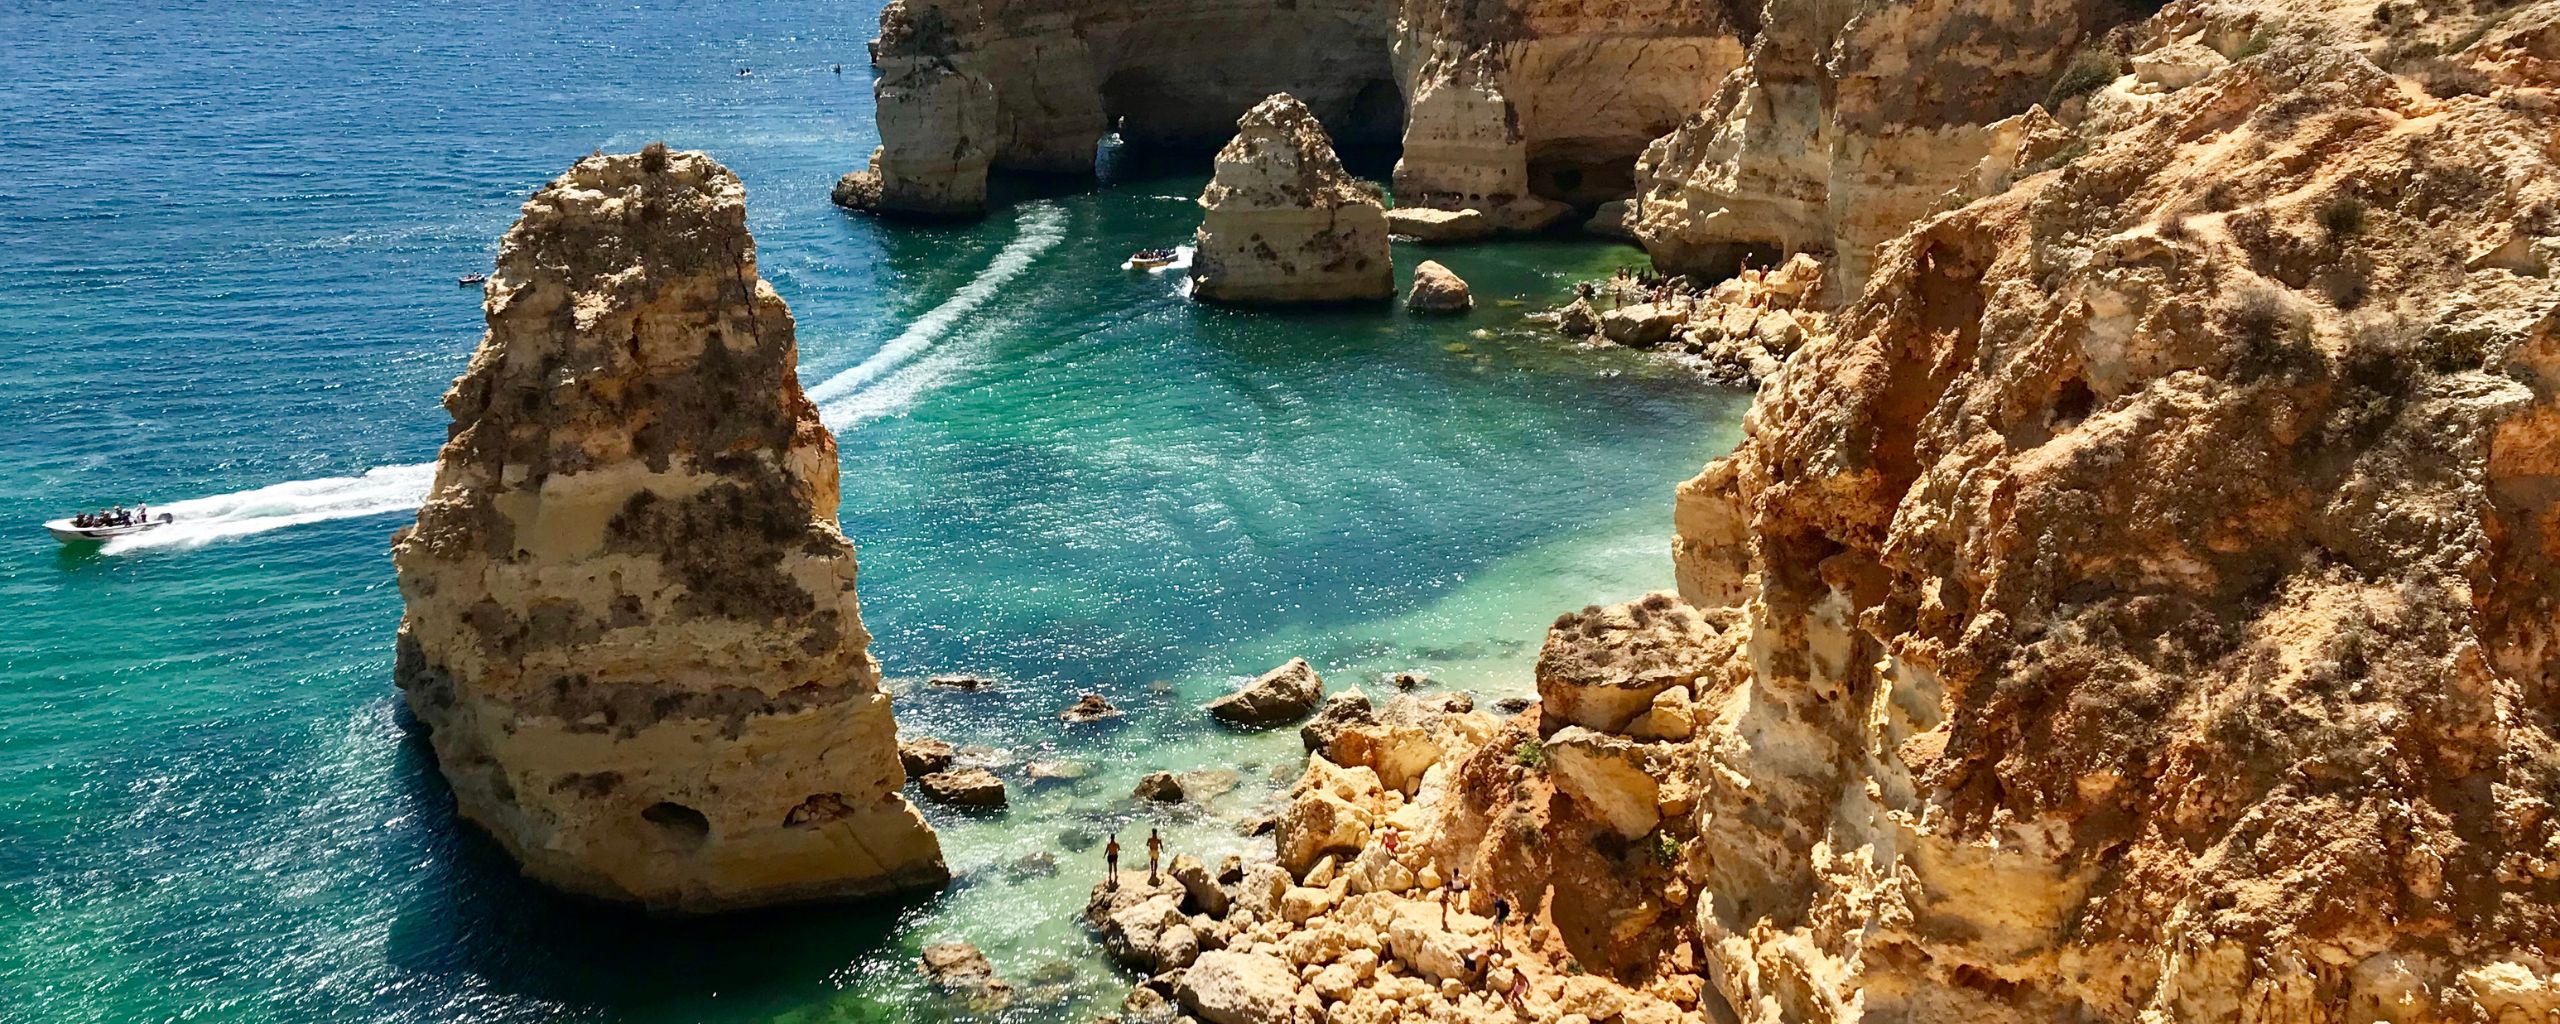 Explore the stunning coast of the Algarve with ExperiencePlus